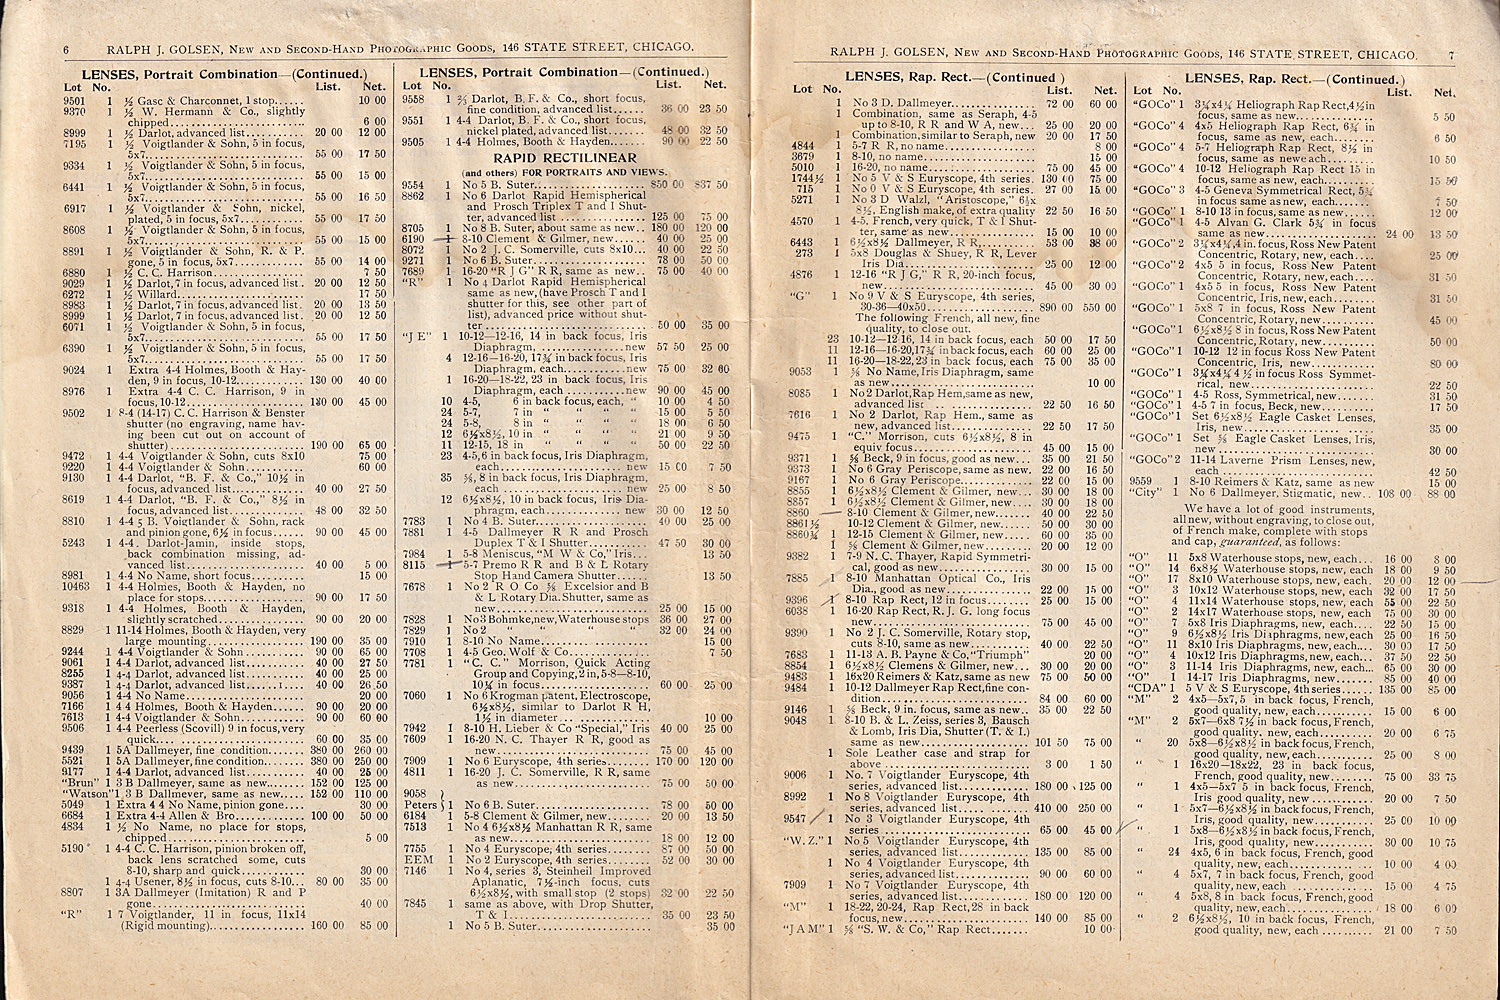 1118.golson.cat.&.bargain.list.no11.1898-06-07-1500.jpg